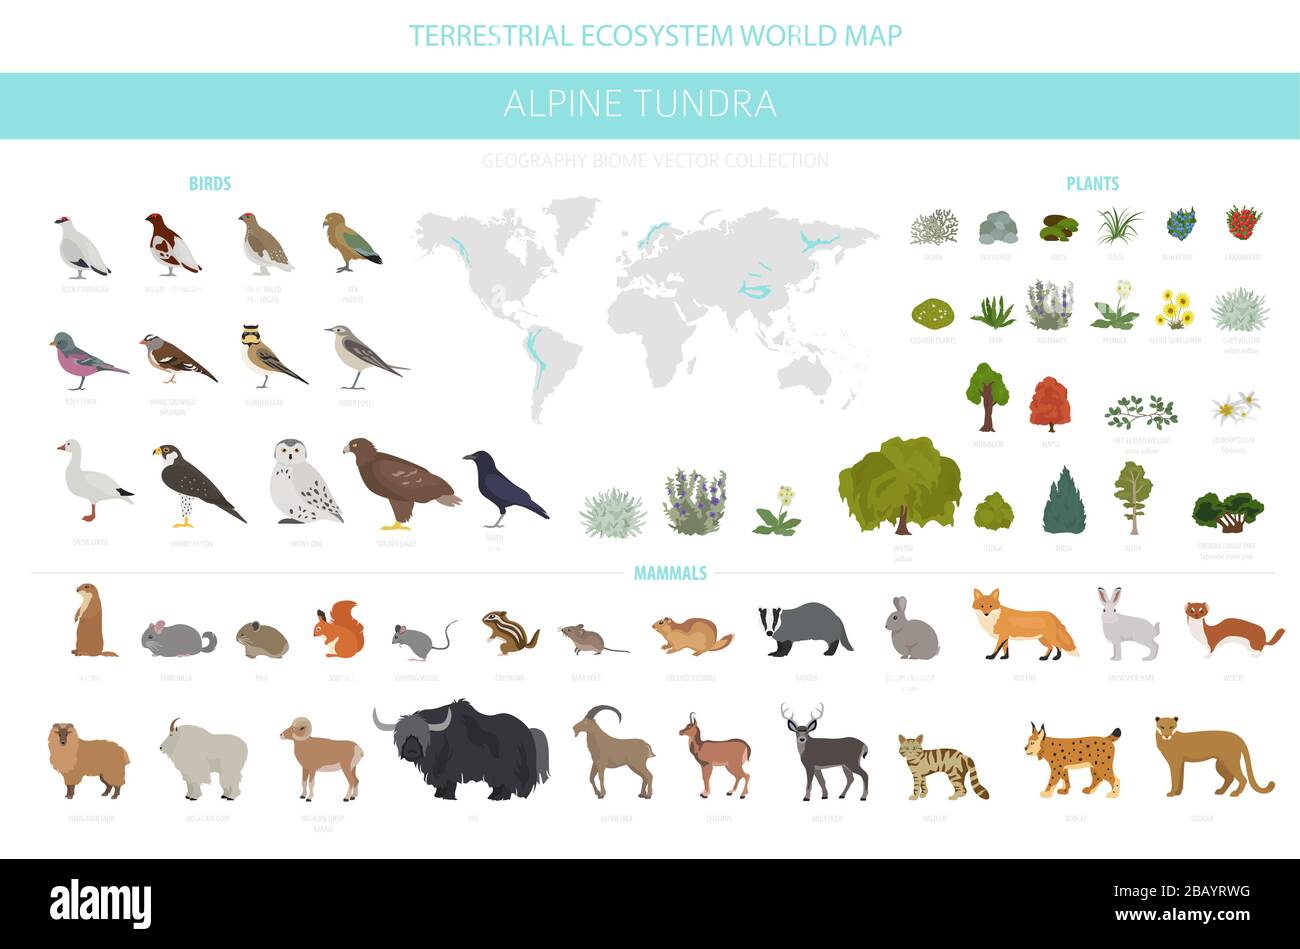 Apine Tundra Biome Natural Region Infographic Terrestrial Ecosystem World Map Animals Birds And Plants Design Set Vector Illustration Stock Vector Image Art Alamy